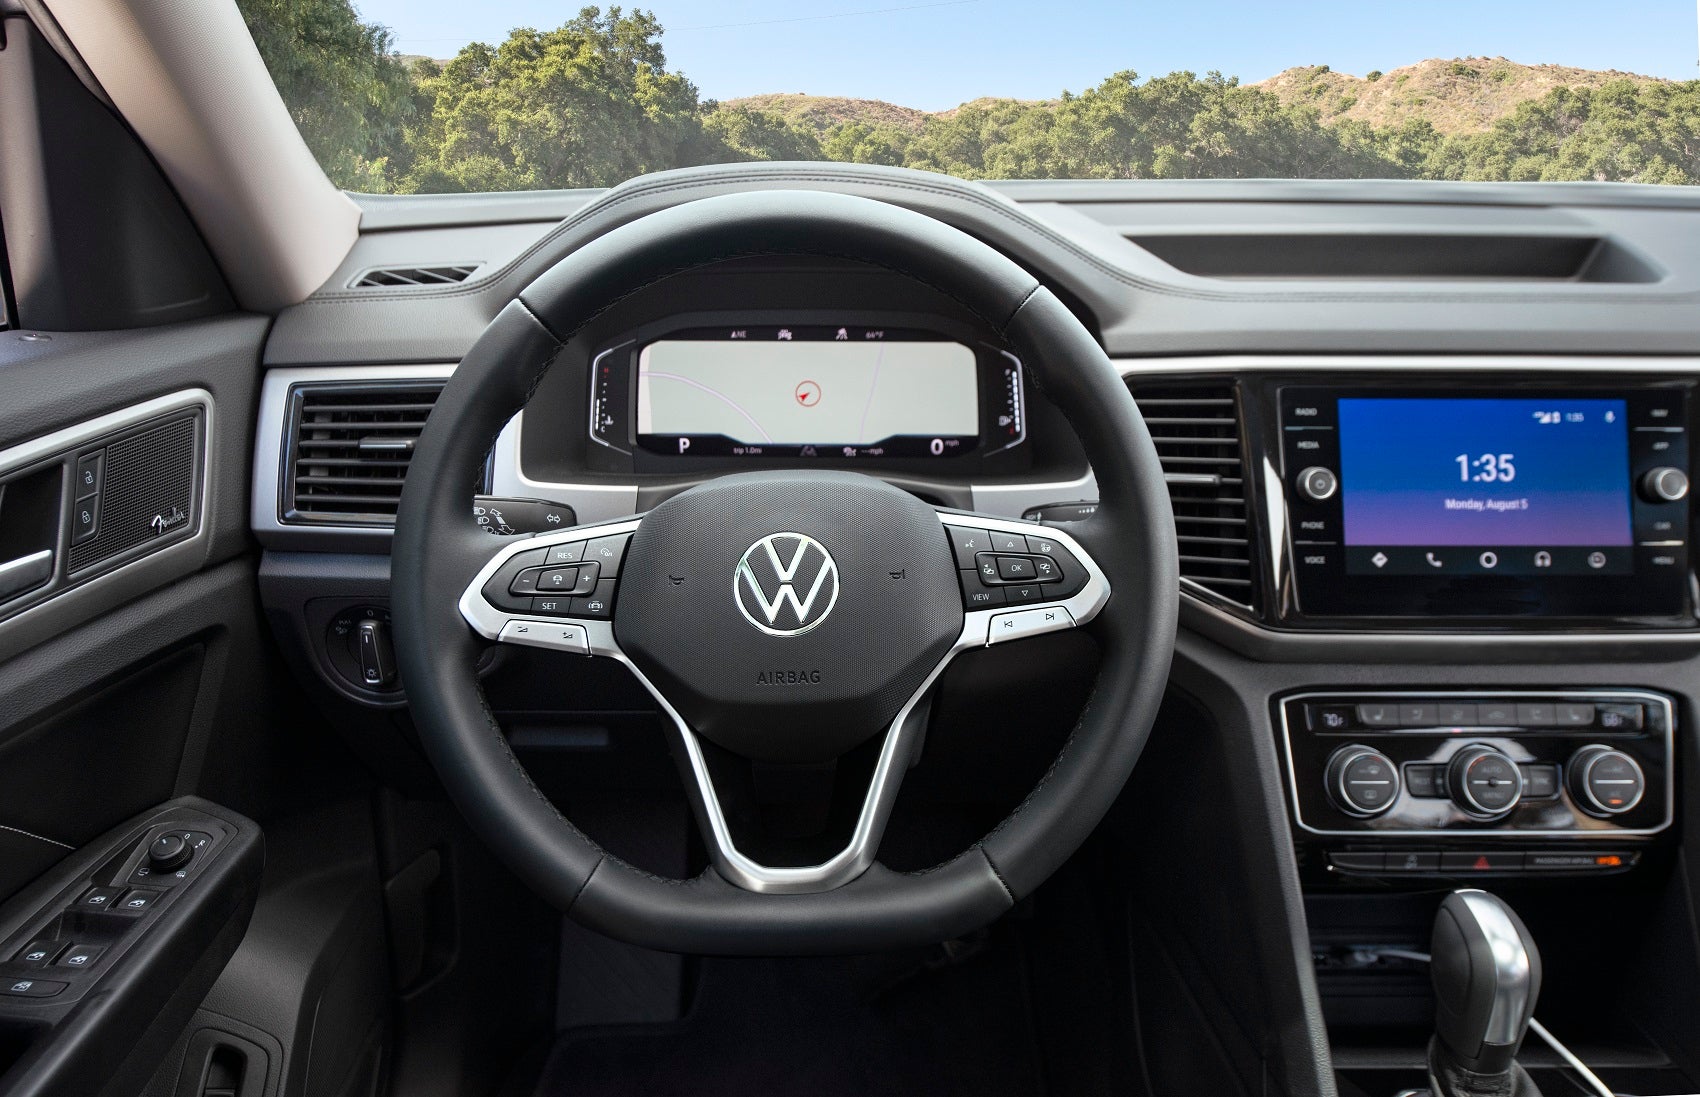 Volkswagen Atlas Interior Technology